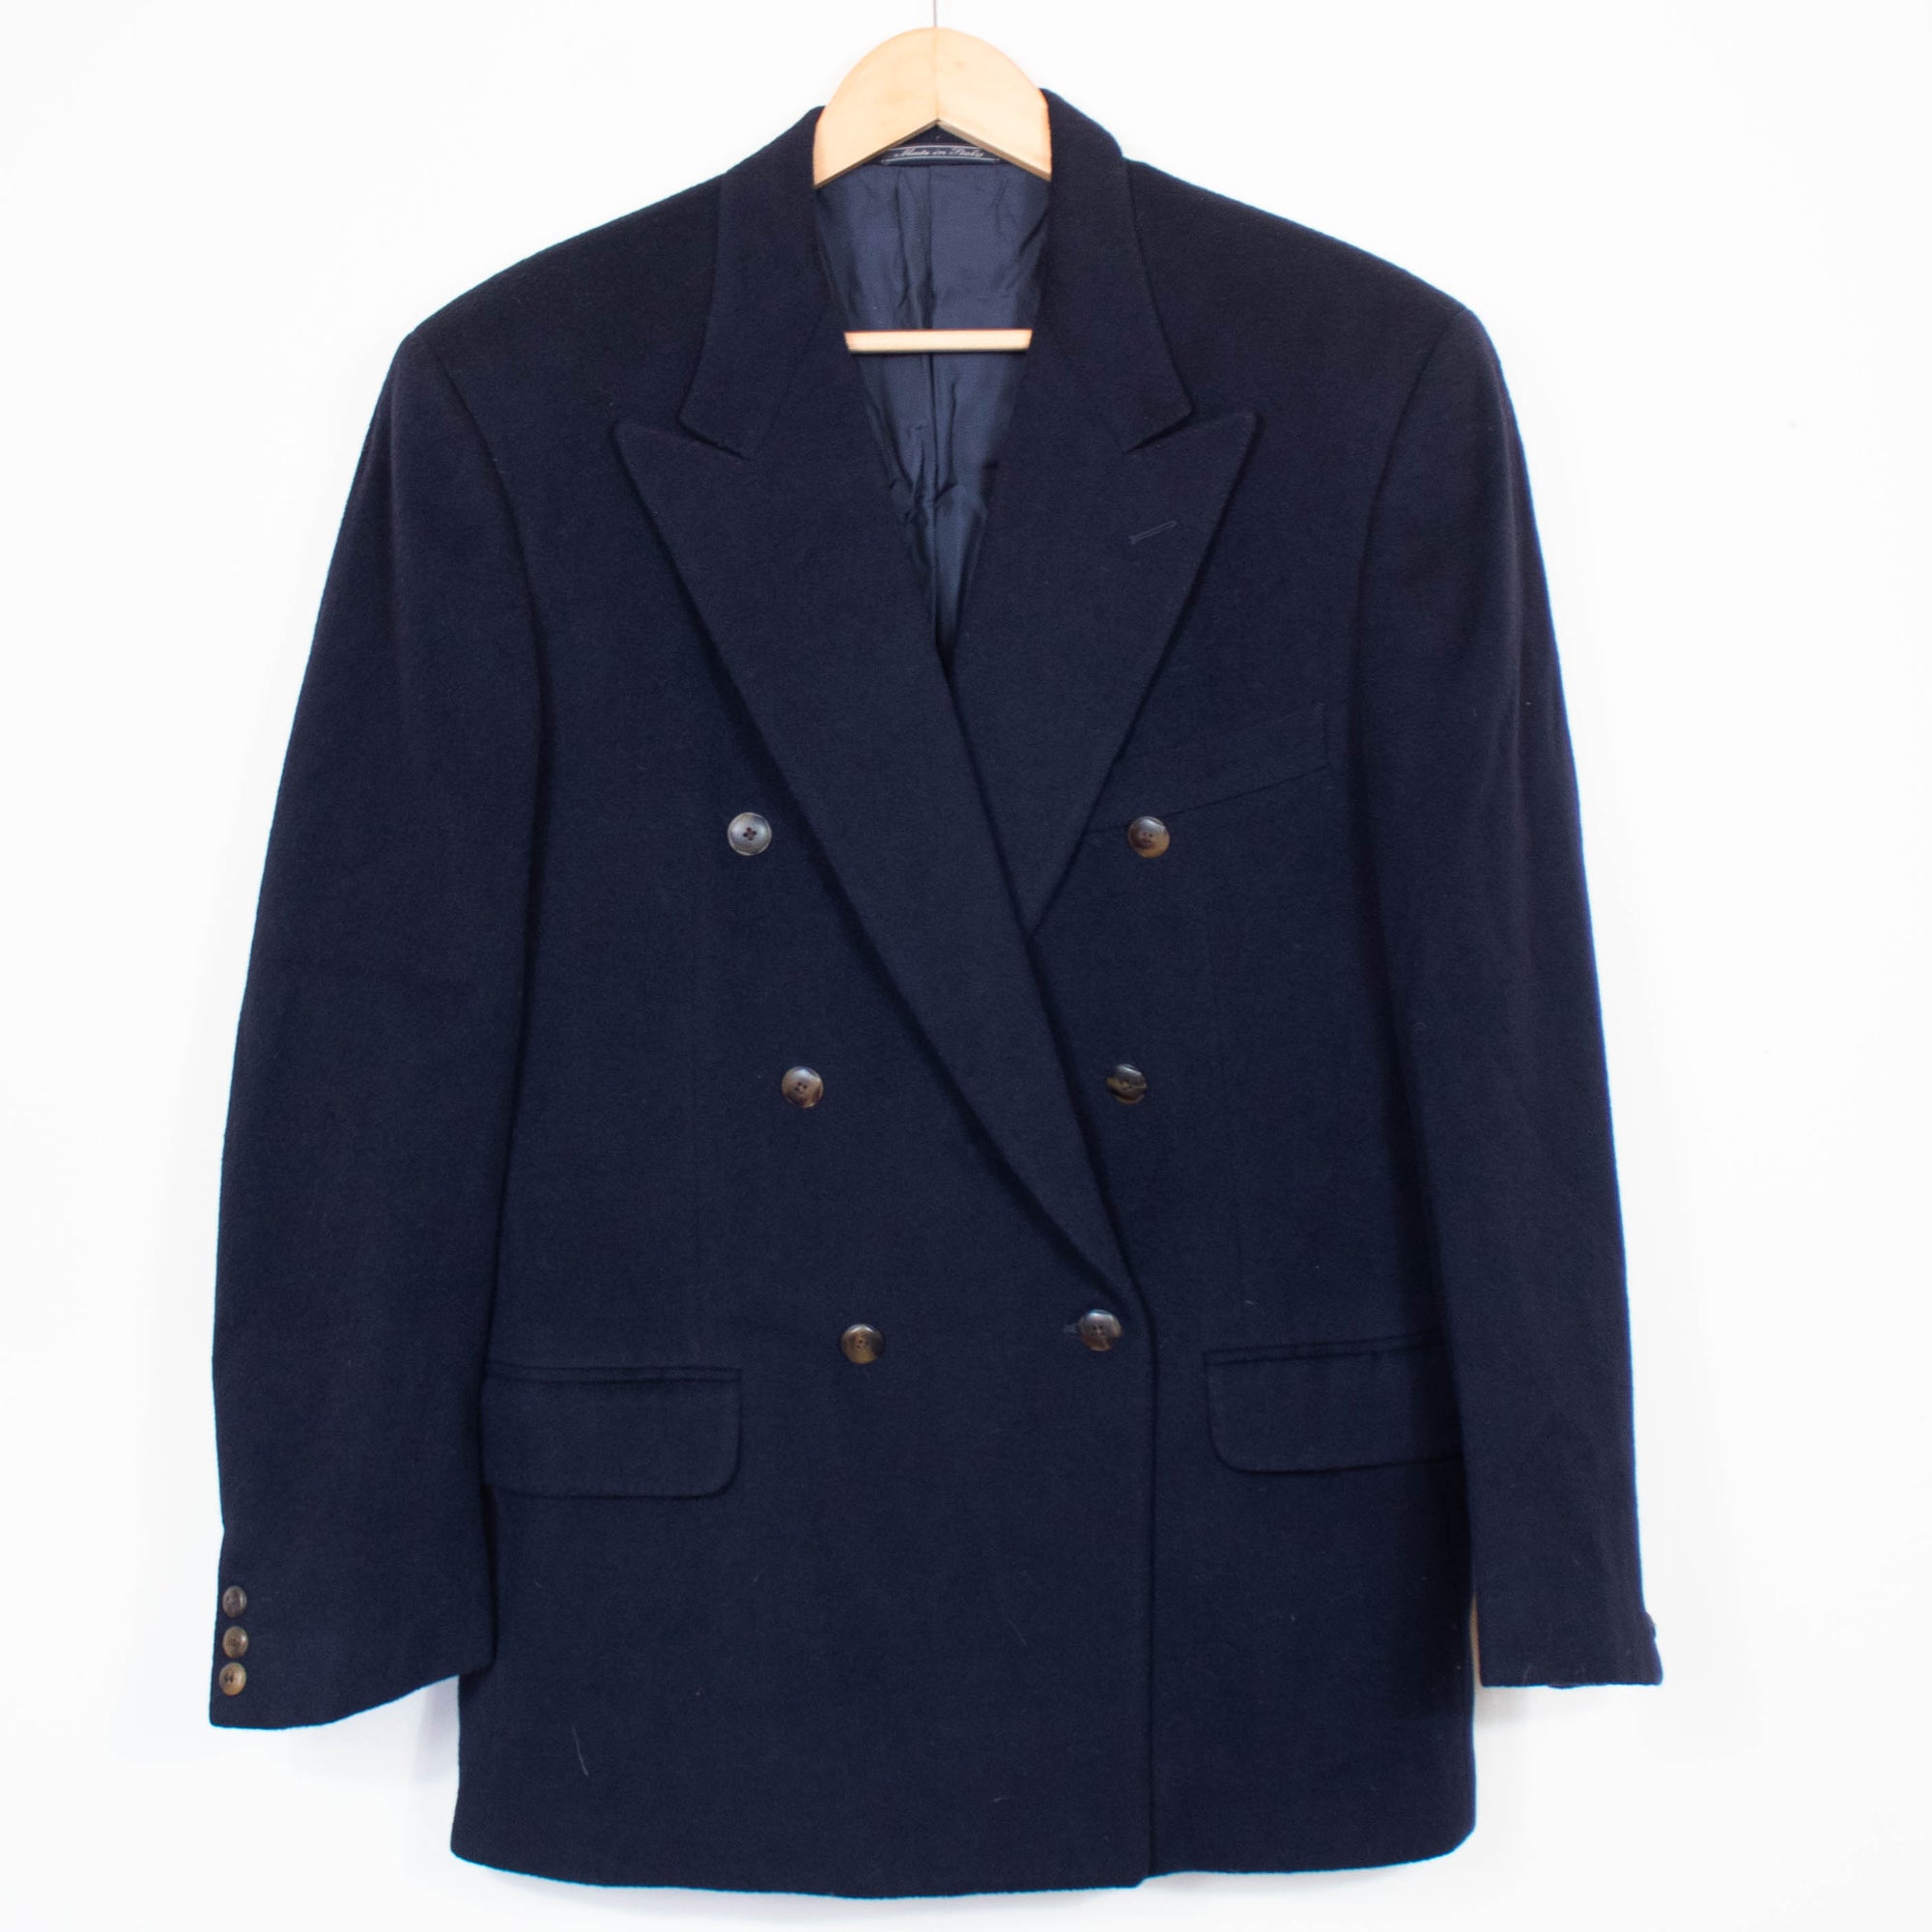 Cornelian coat